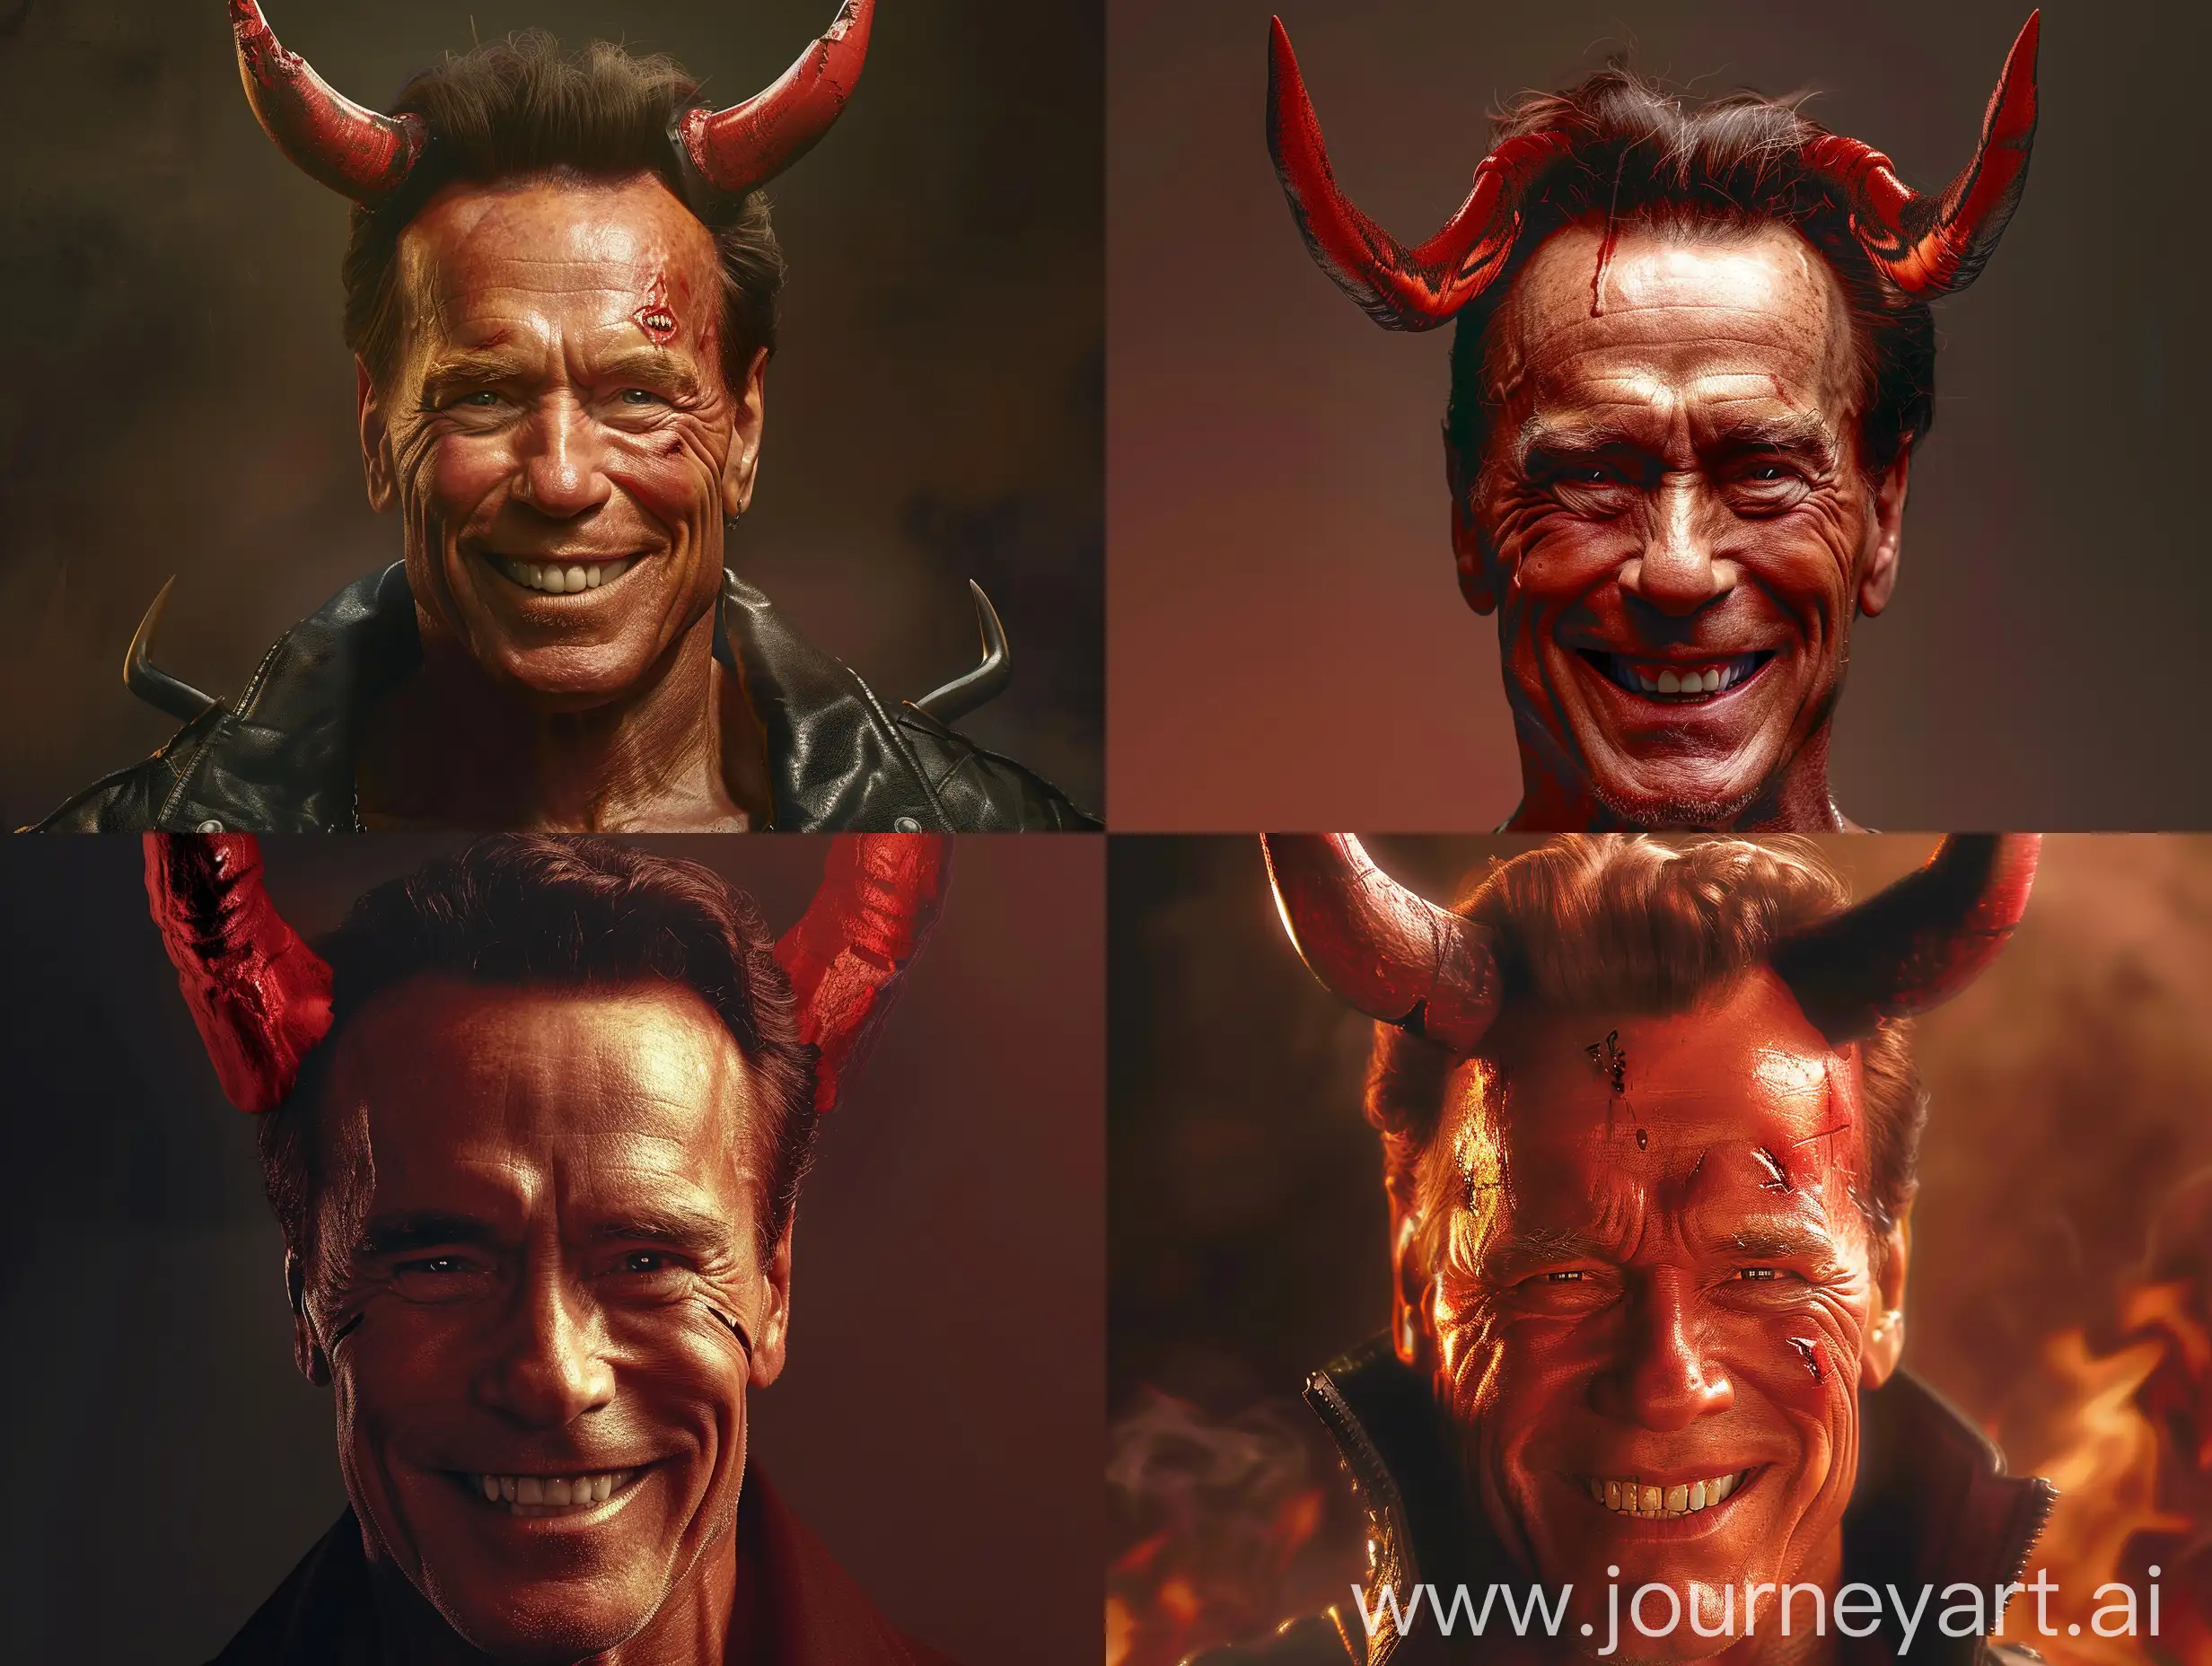 Arnold-Schwarzenegger-Embracing-Fame-with-Devilish-Persona